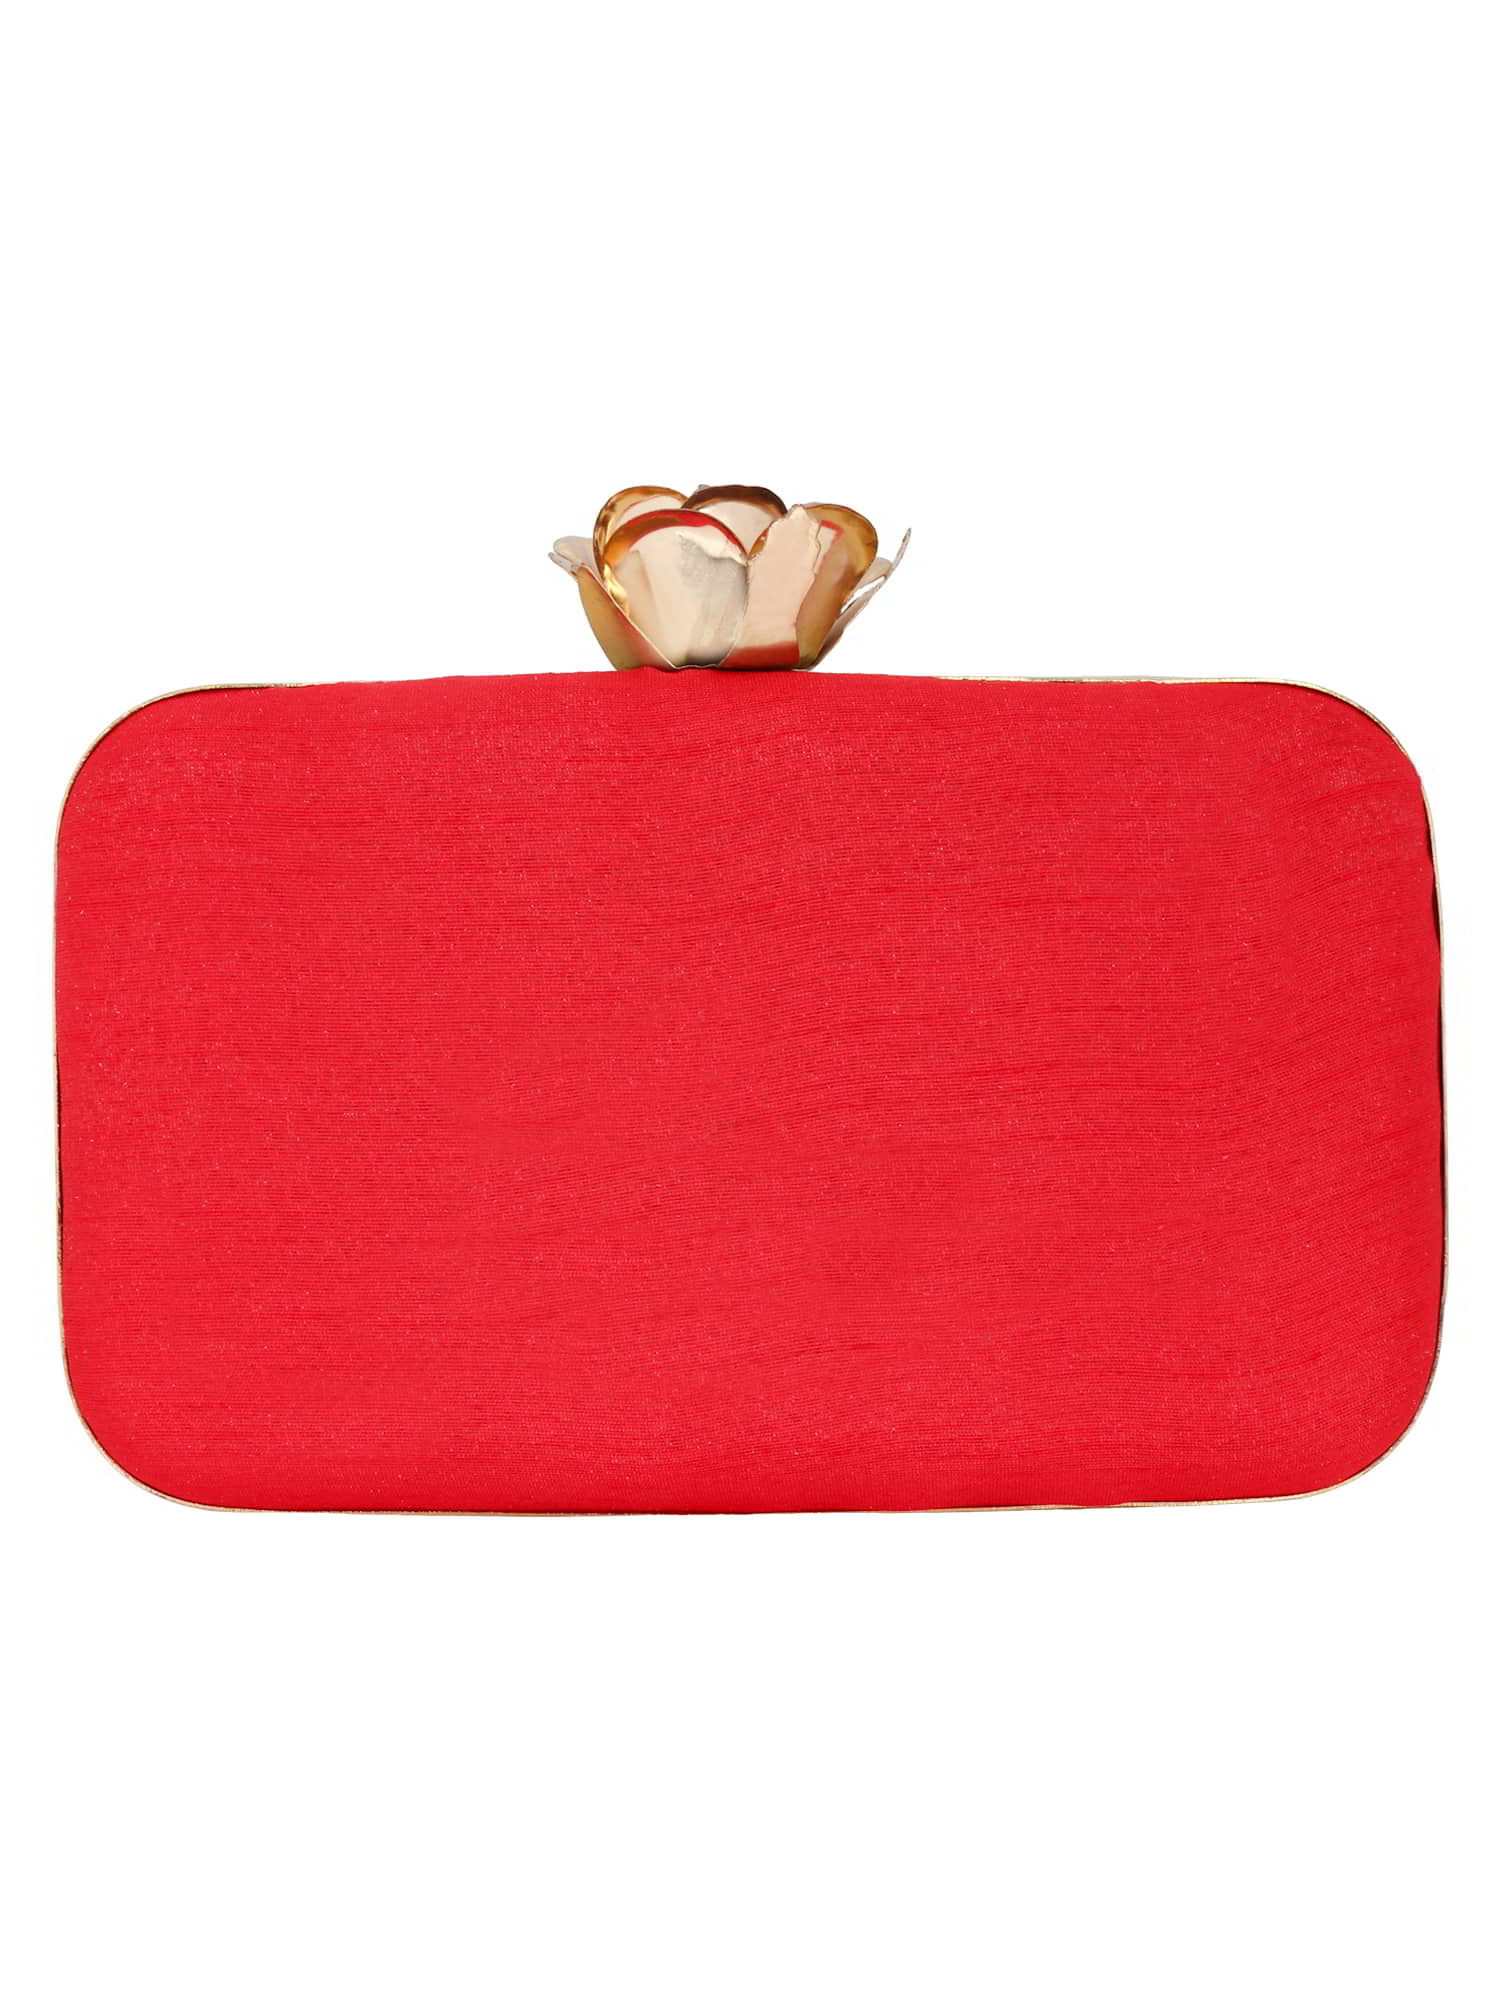 Nia Creations Red Sling Bag Women Glitter Sequins Crossbody Shoulder Bag  Evening Bag Wrislet Purse Handbag |birthday gift red - Price in India |  Flipkart.com